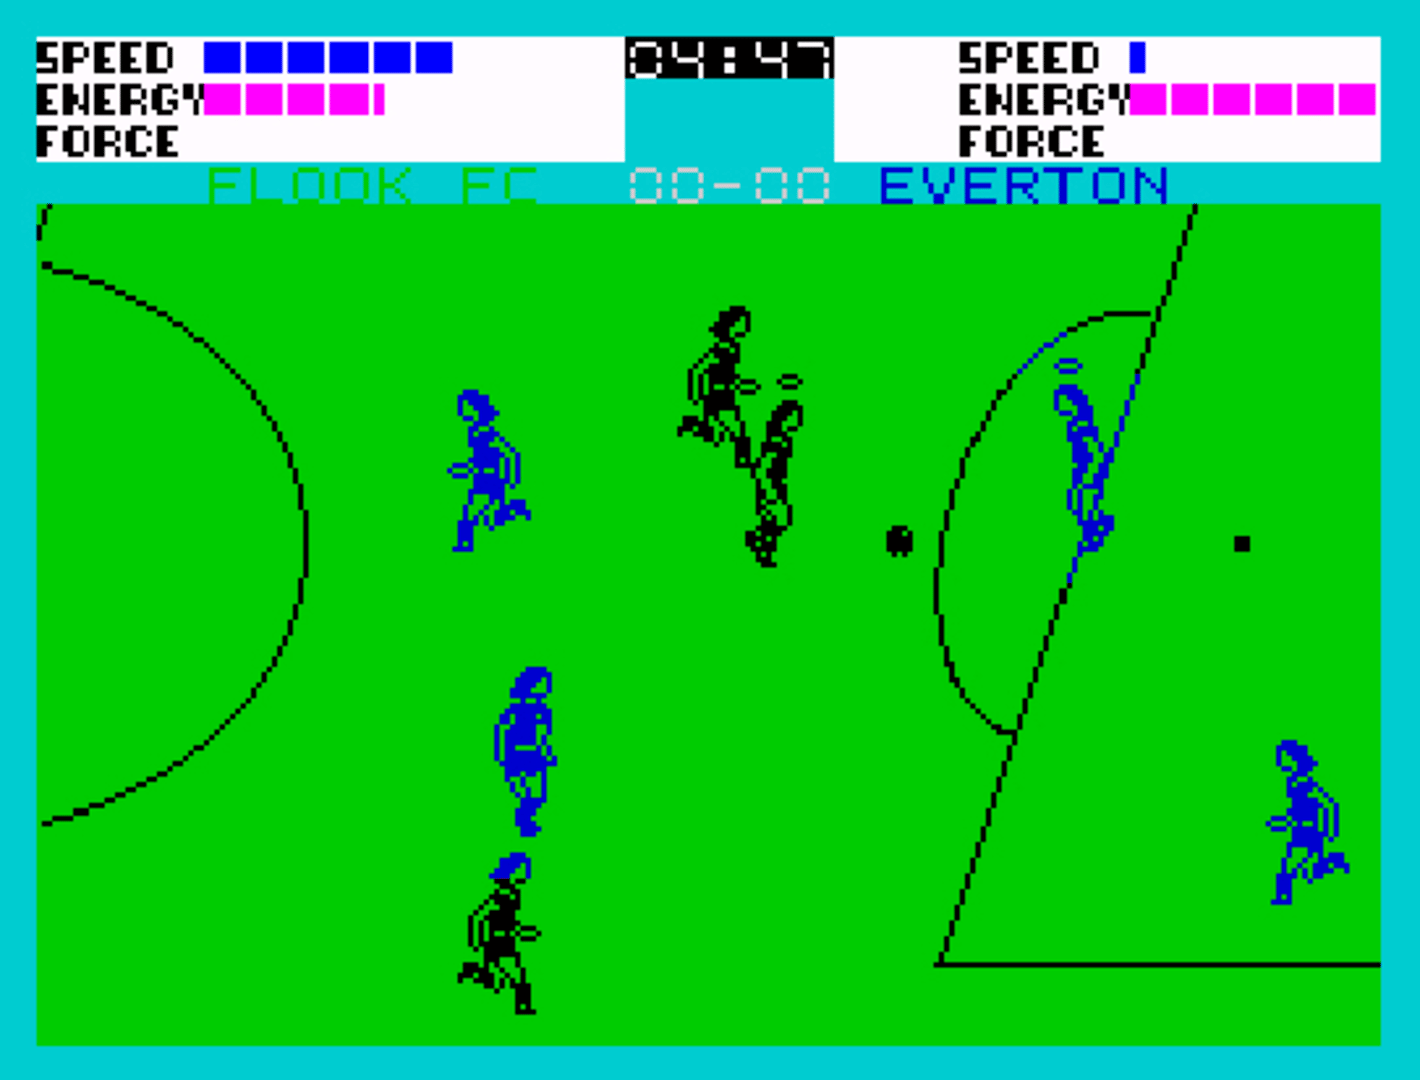 Super Soccer screenshot